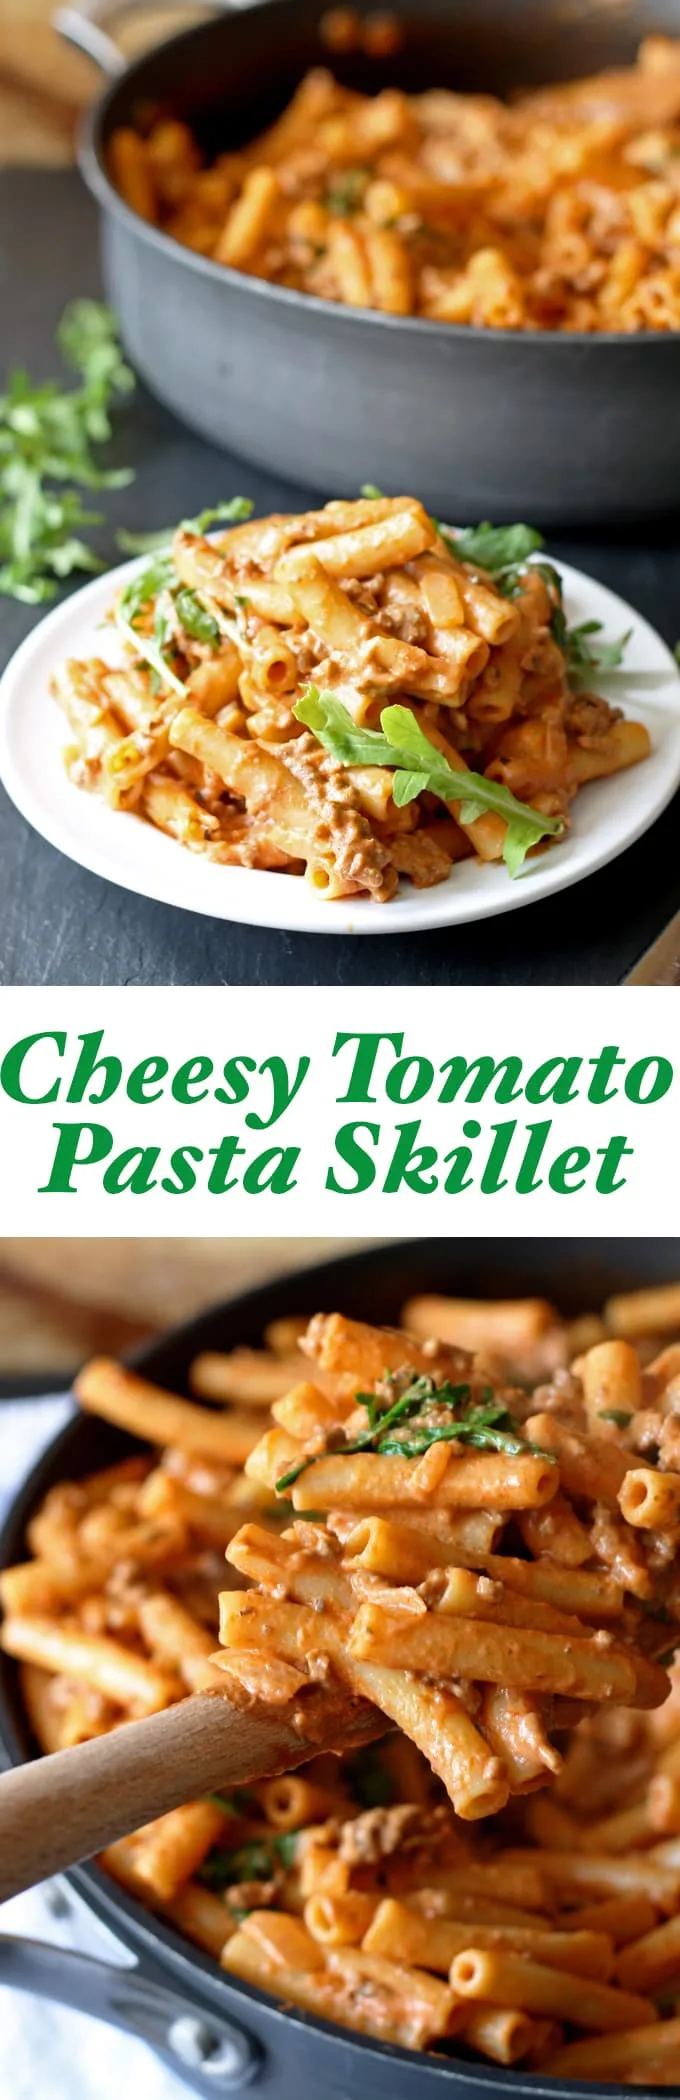 Cheesy Tomato Pasta Skillet | www.honeyandbirch.com | #dinner #sundaysupper #30minutemeal